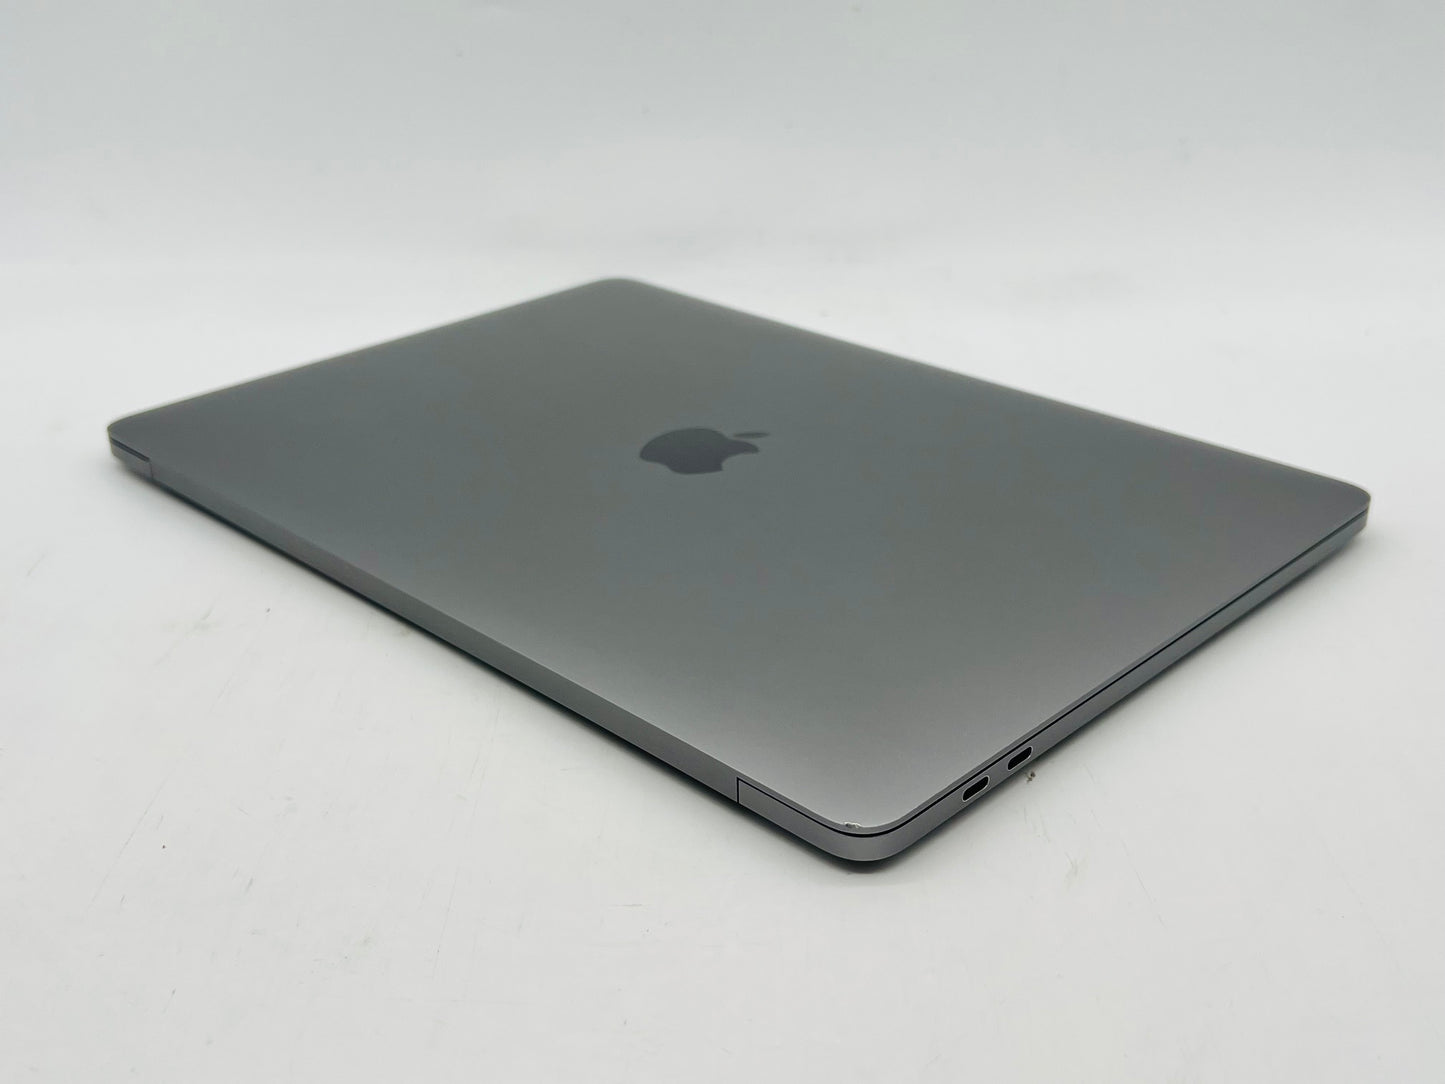 Apple 2018 MacBook Pro 13 in TB 2.7GHz Quad-Core i7 16GB RAM 512GB SSD IIPG 655